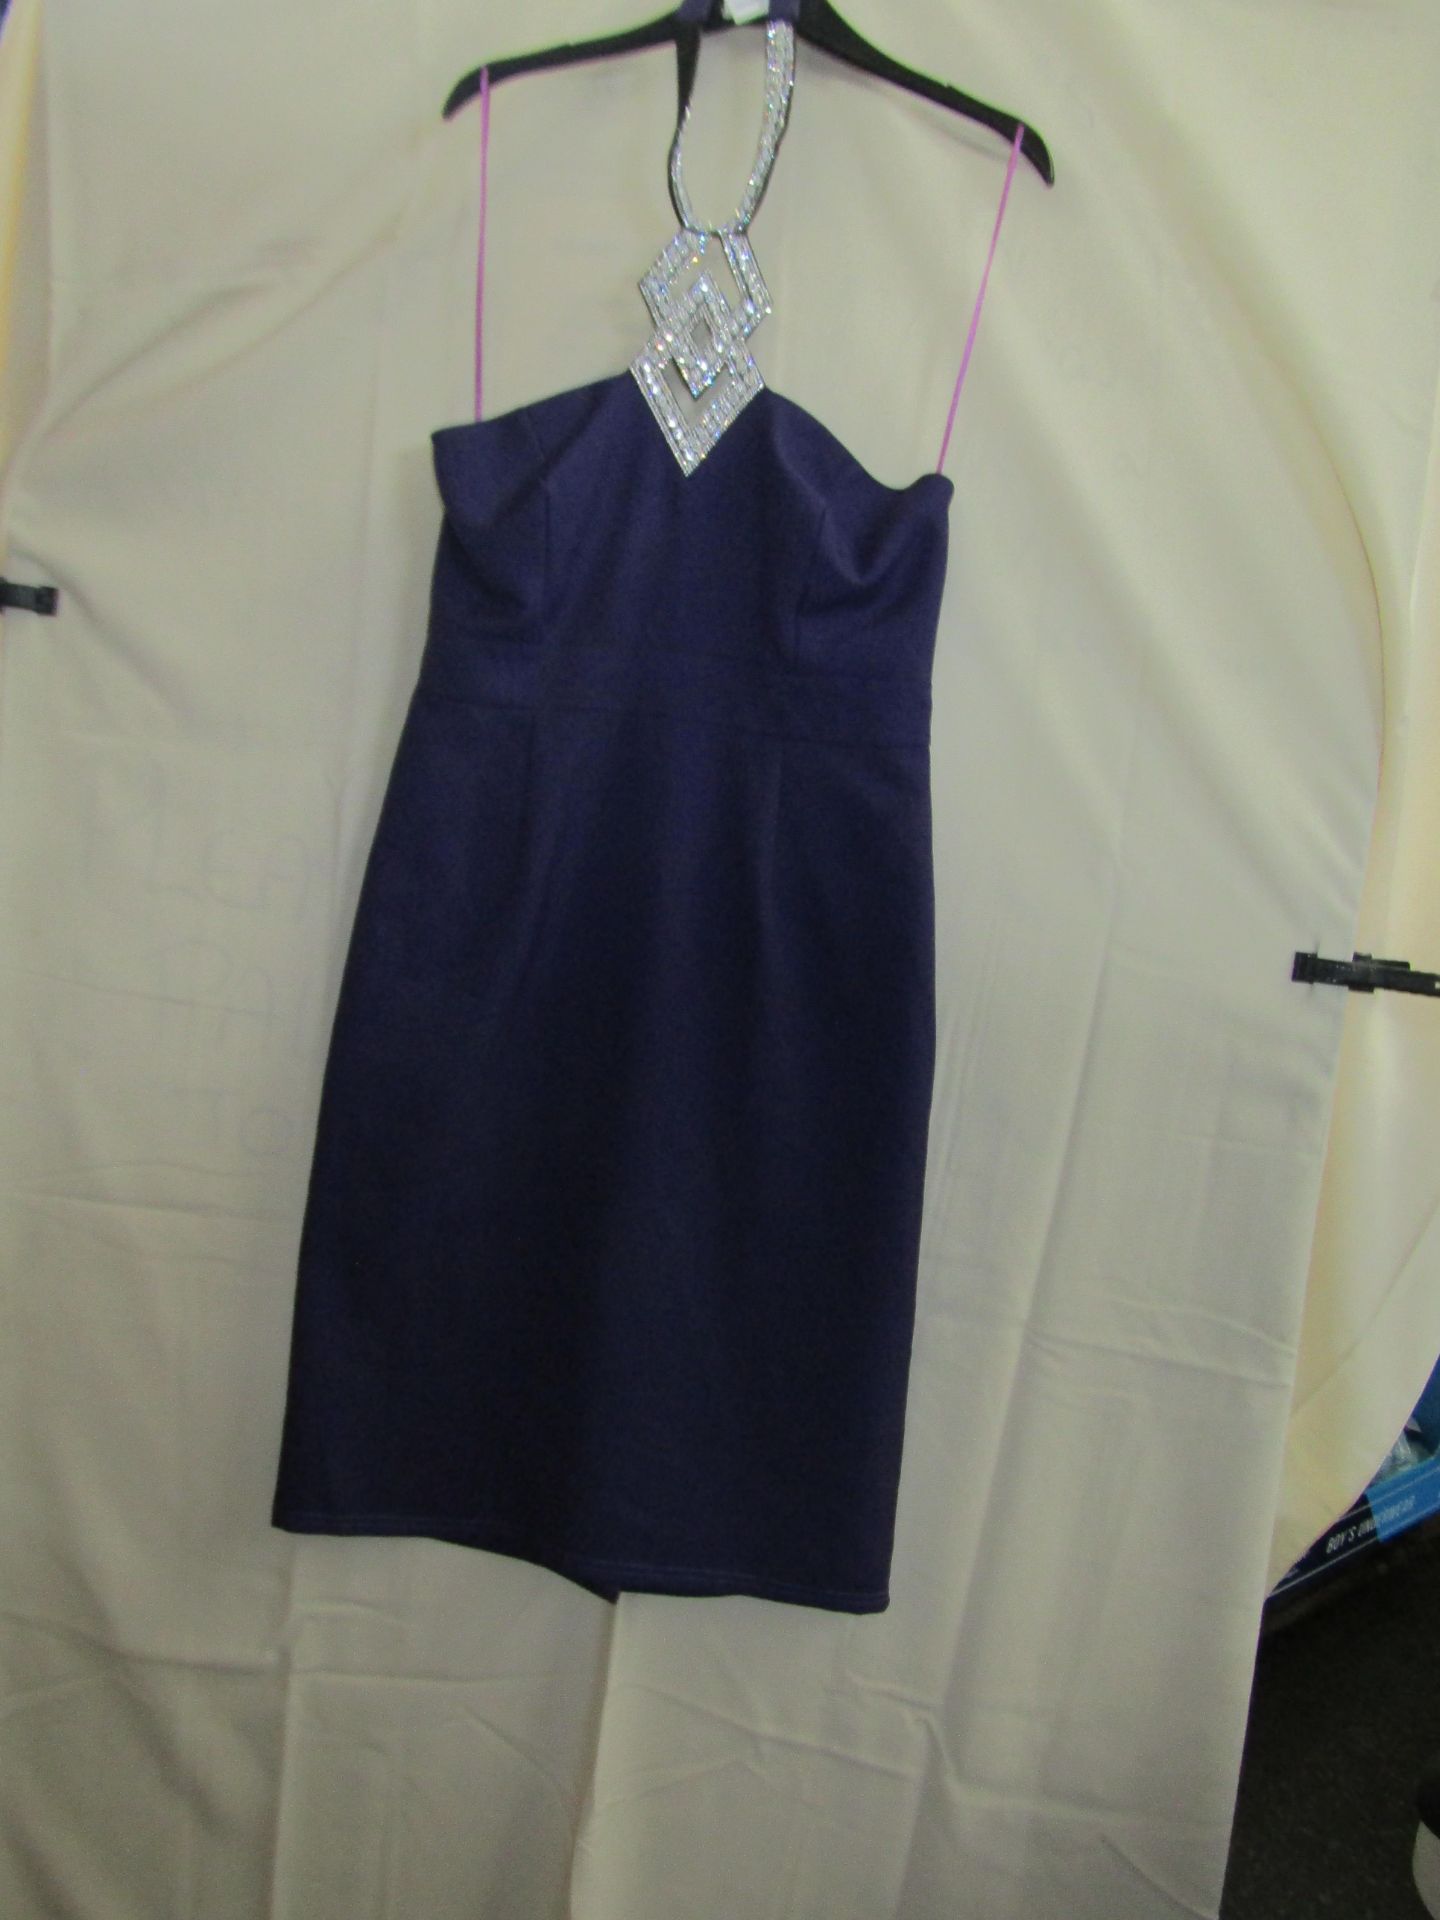 Heena Fashions Dress Purple With Diamanti Neck Piece Size Approx 10-12 Looks Unworn No Tags